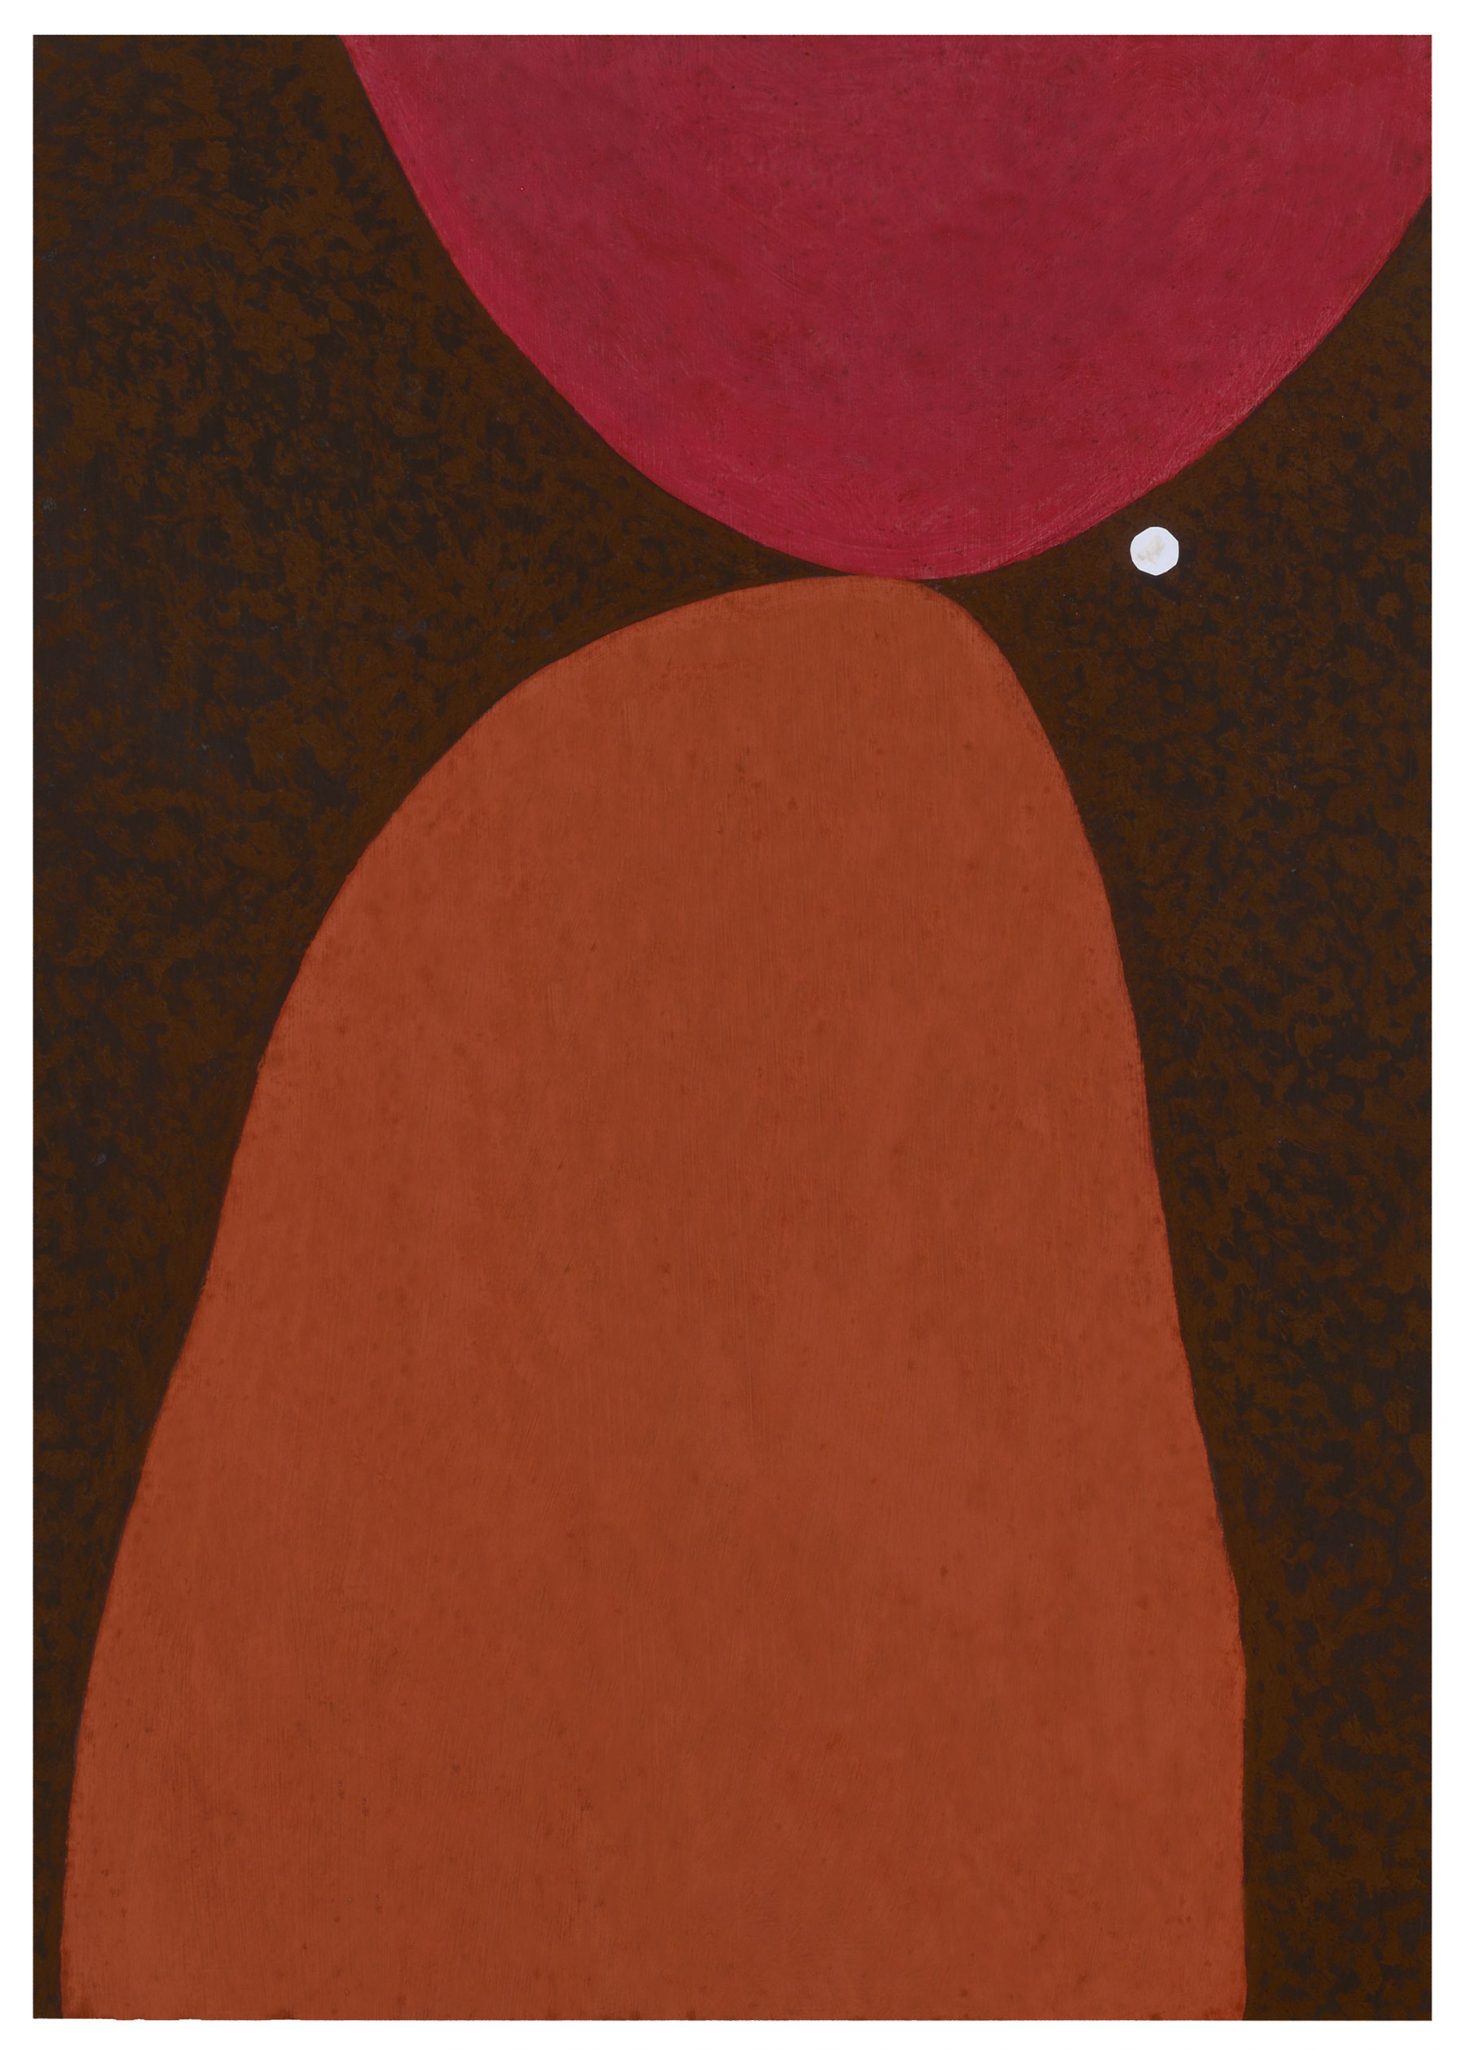 Contact, 2000, 71 x 97 cm, Conté and gouache on card